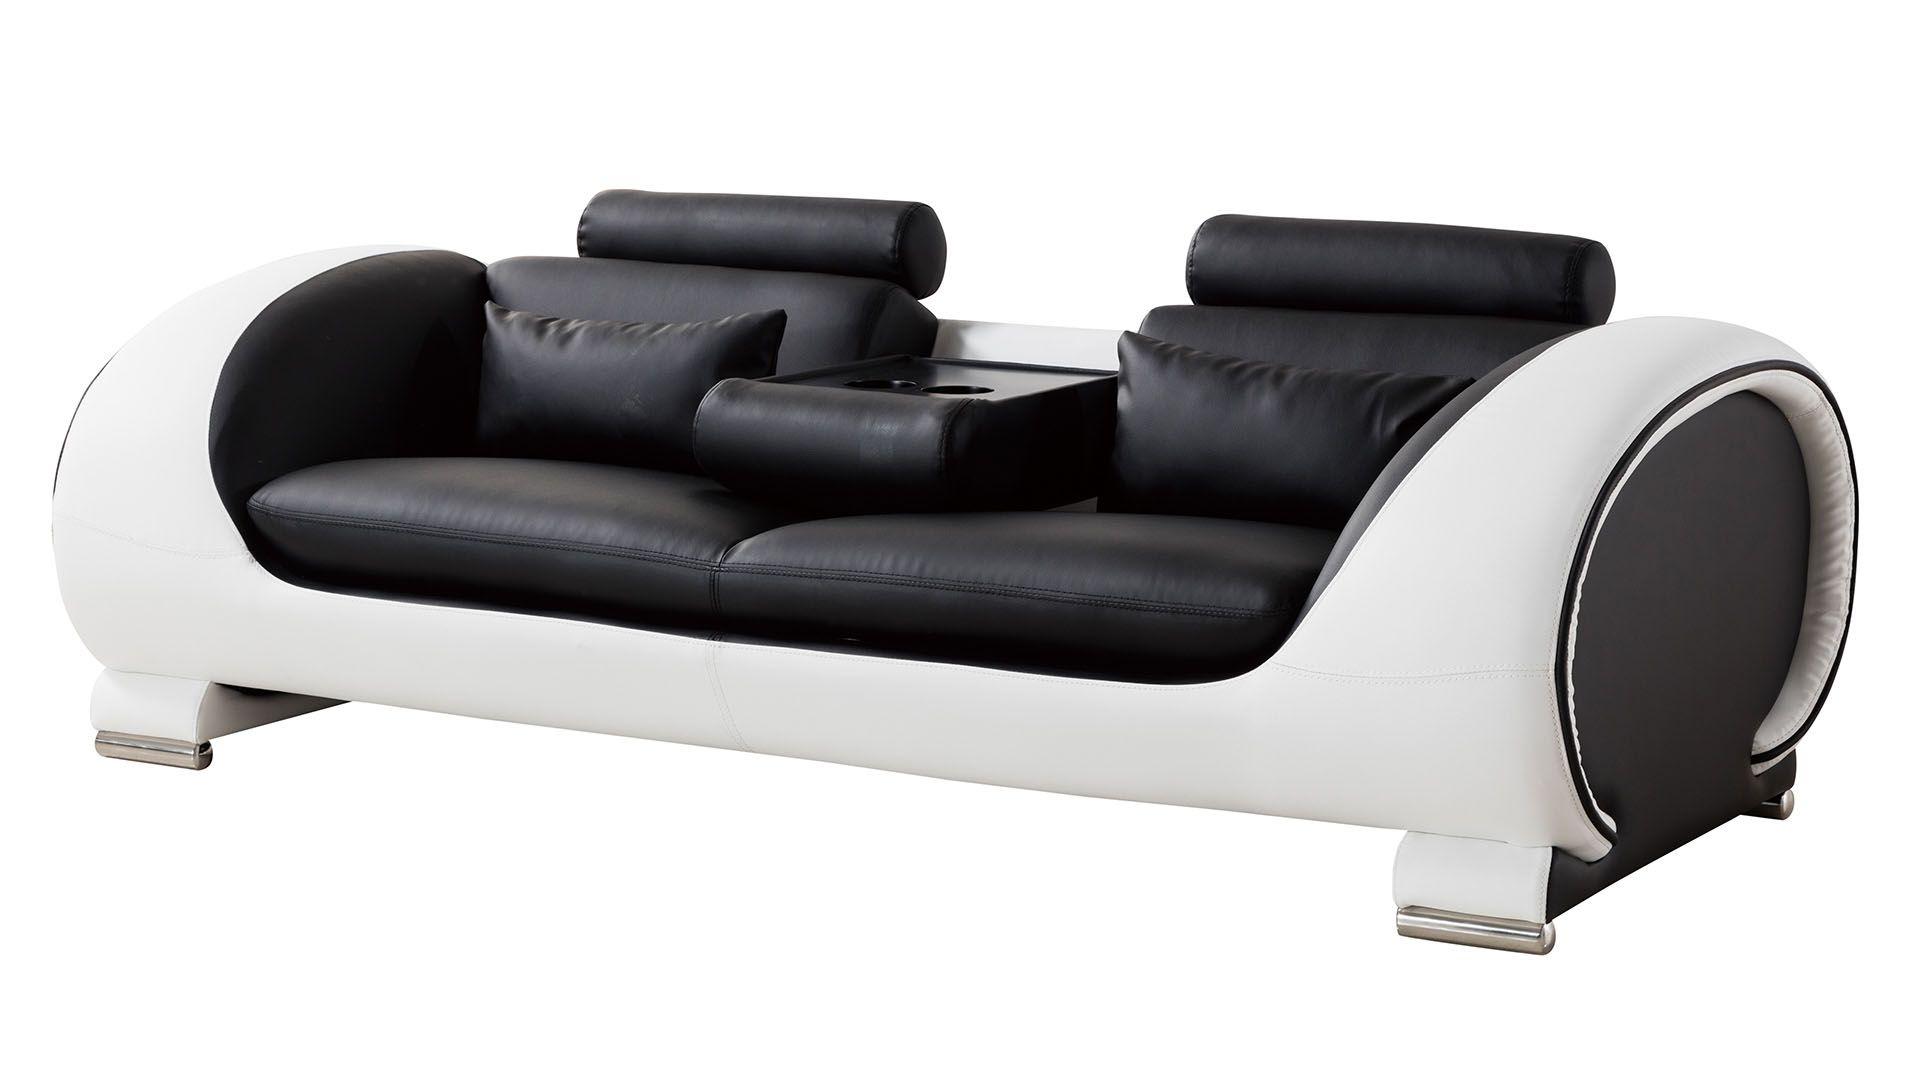 

    
American Eagle Furniture AE-D802-BK-W Sofa Set White/Black AE-D802-BK-W-2PC
